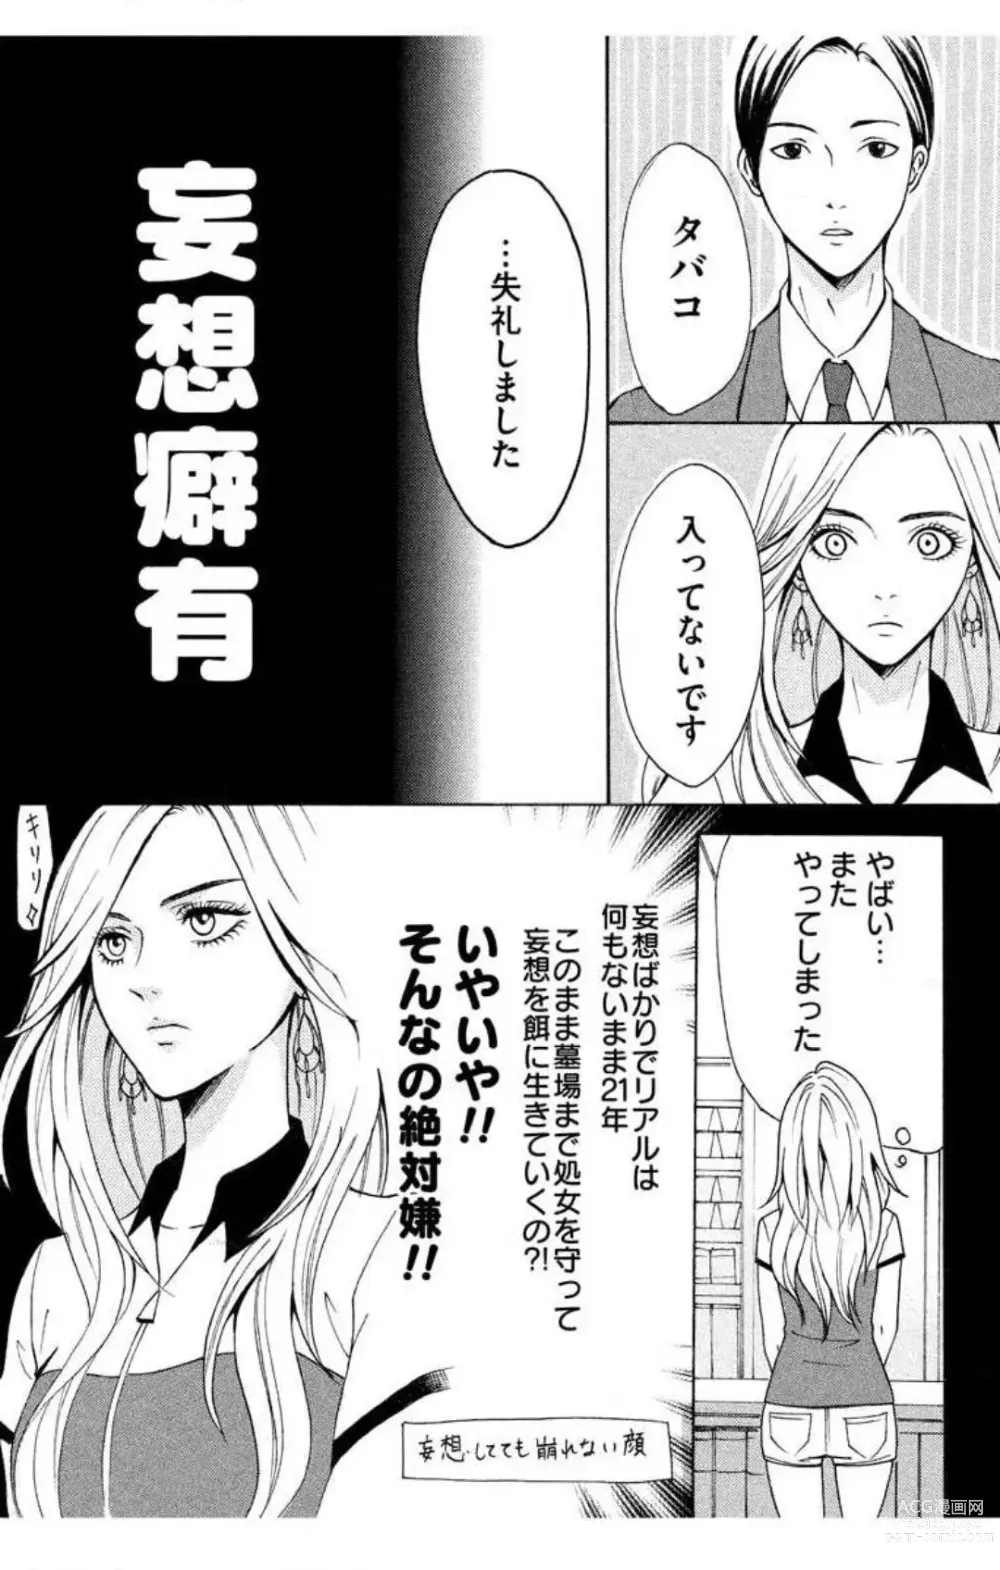 Page 10 of manga Mousou Shoujo 1-20